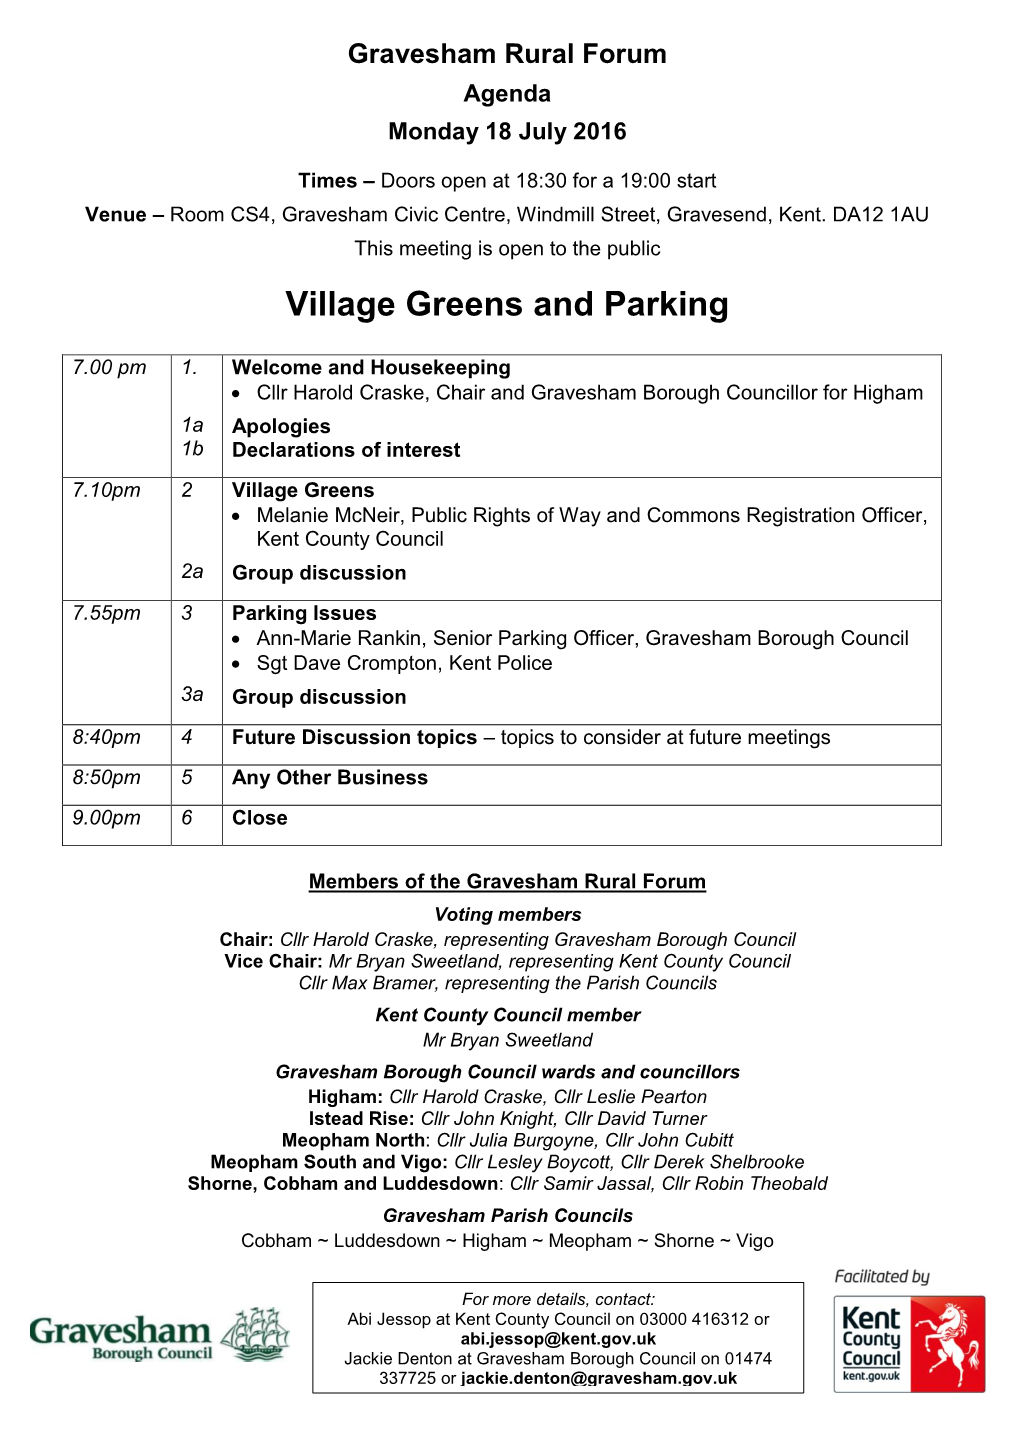 Gravesham Rural Forum Agenda Monday 18 July 2016